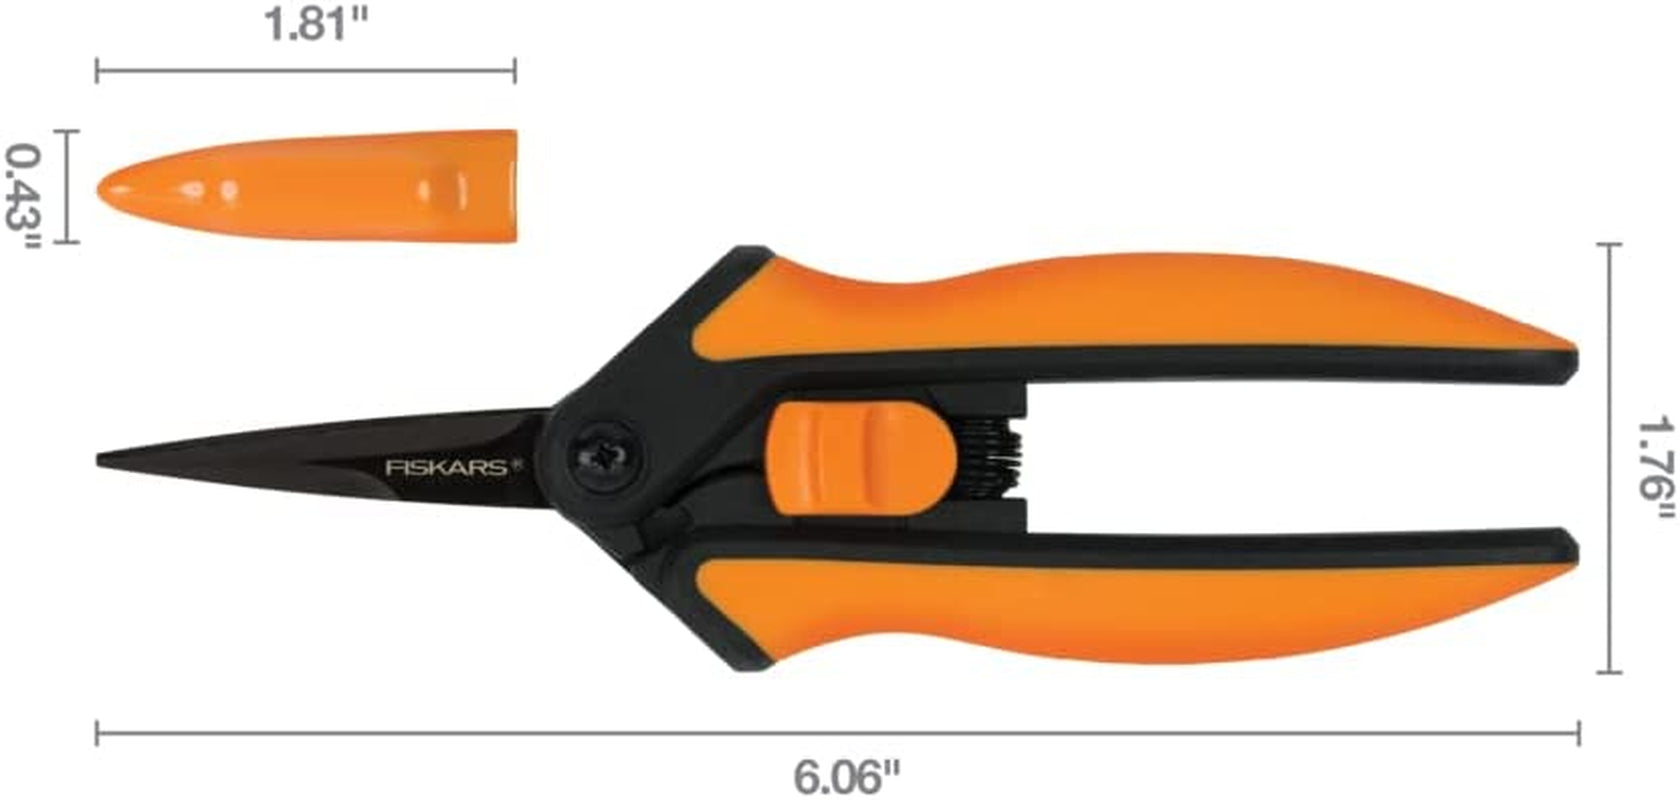 Fiskars, Fiskars 399241-1002 Micro-Tip Pruning Snips, Non-Stick Blades, 2 Count, Orange